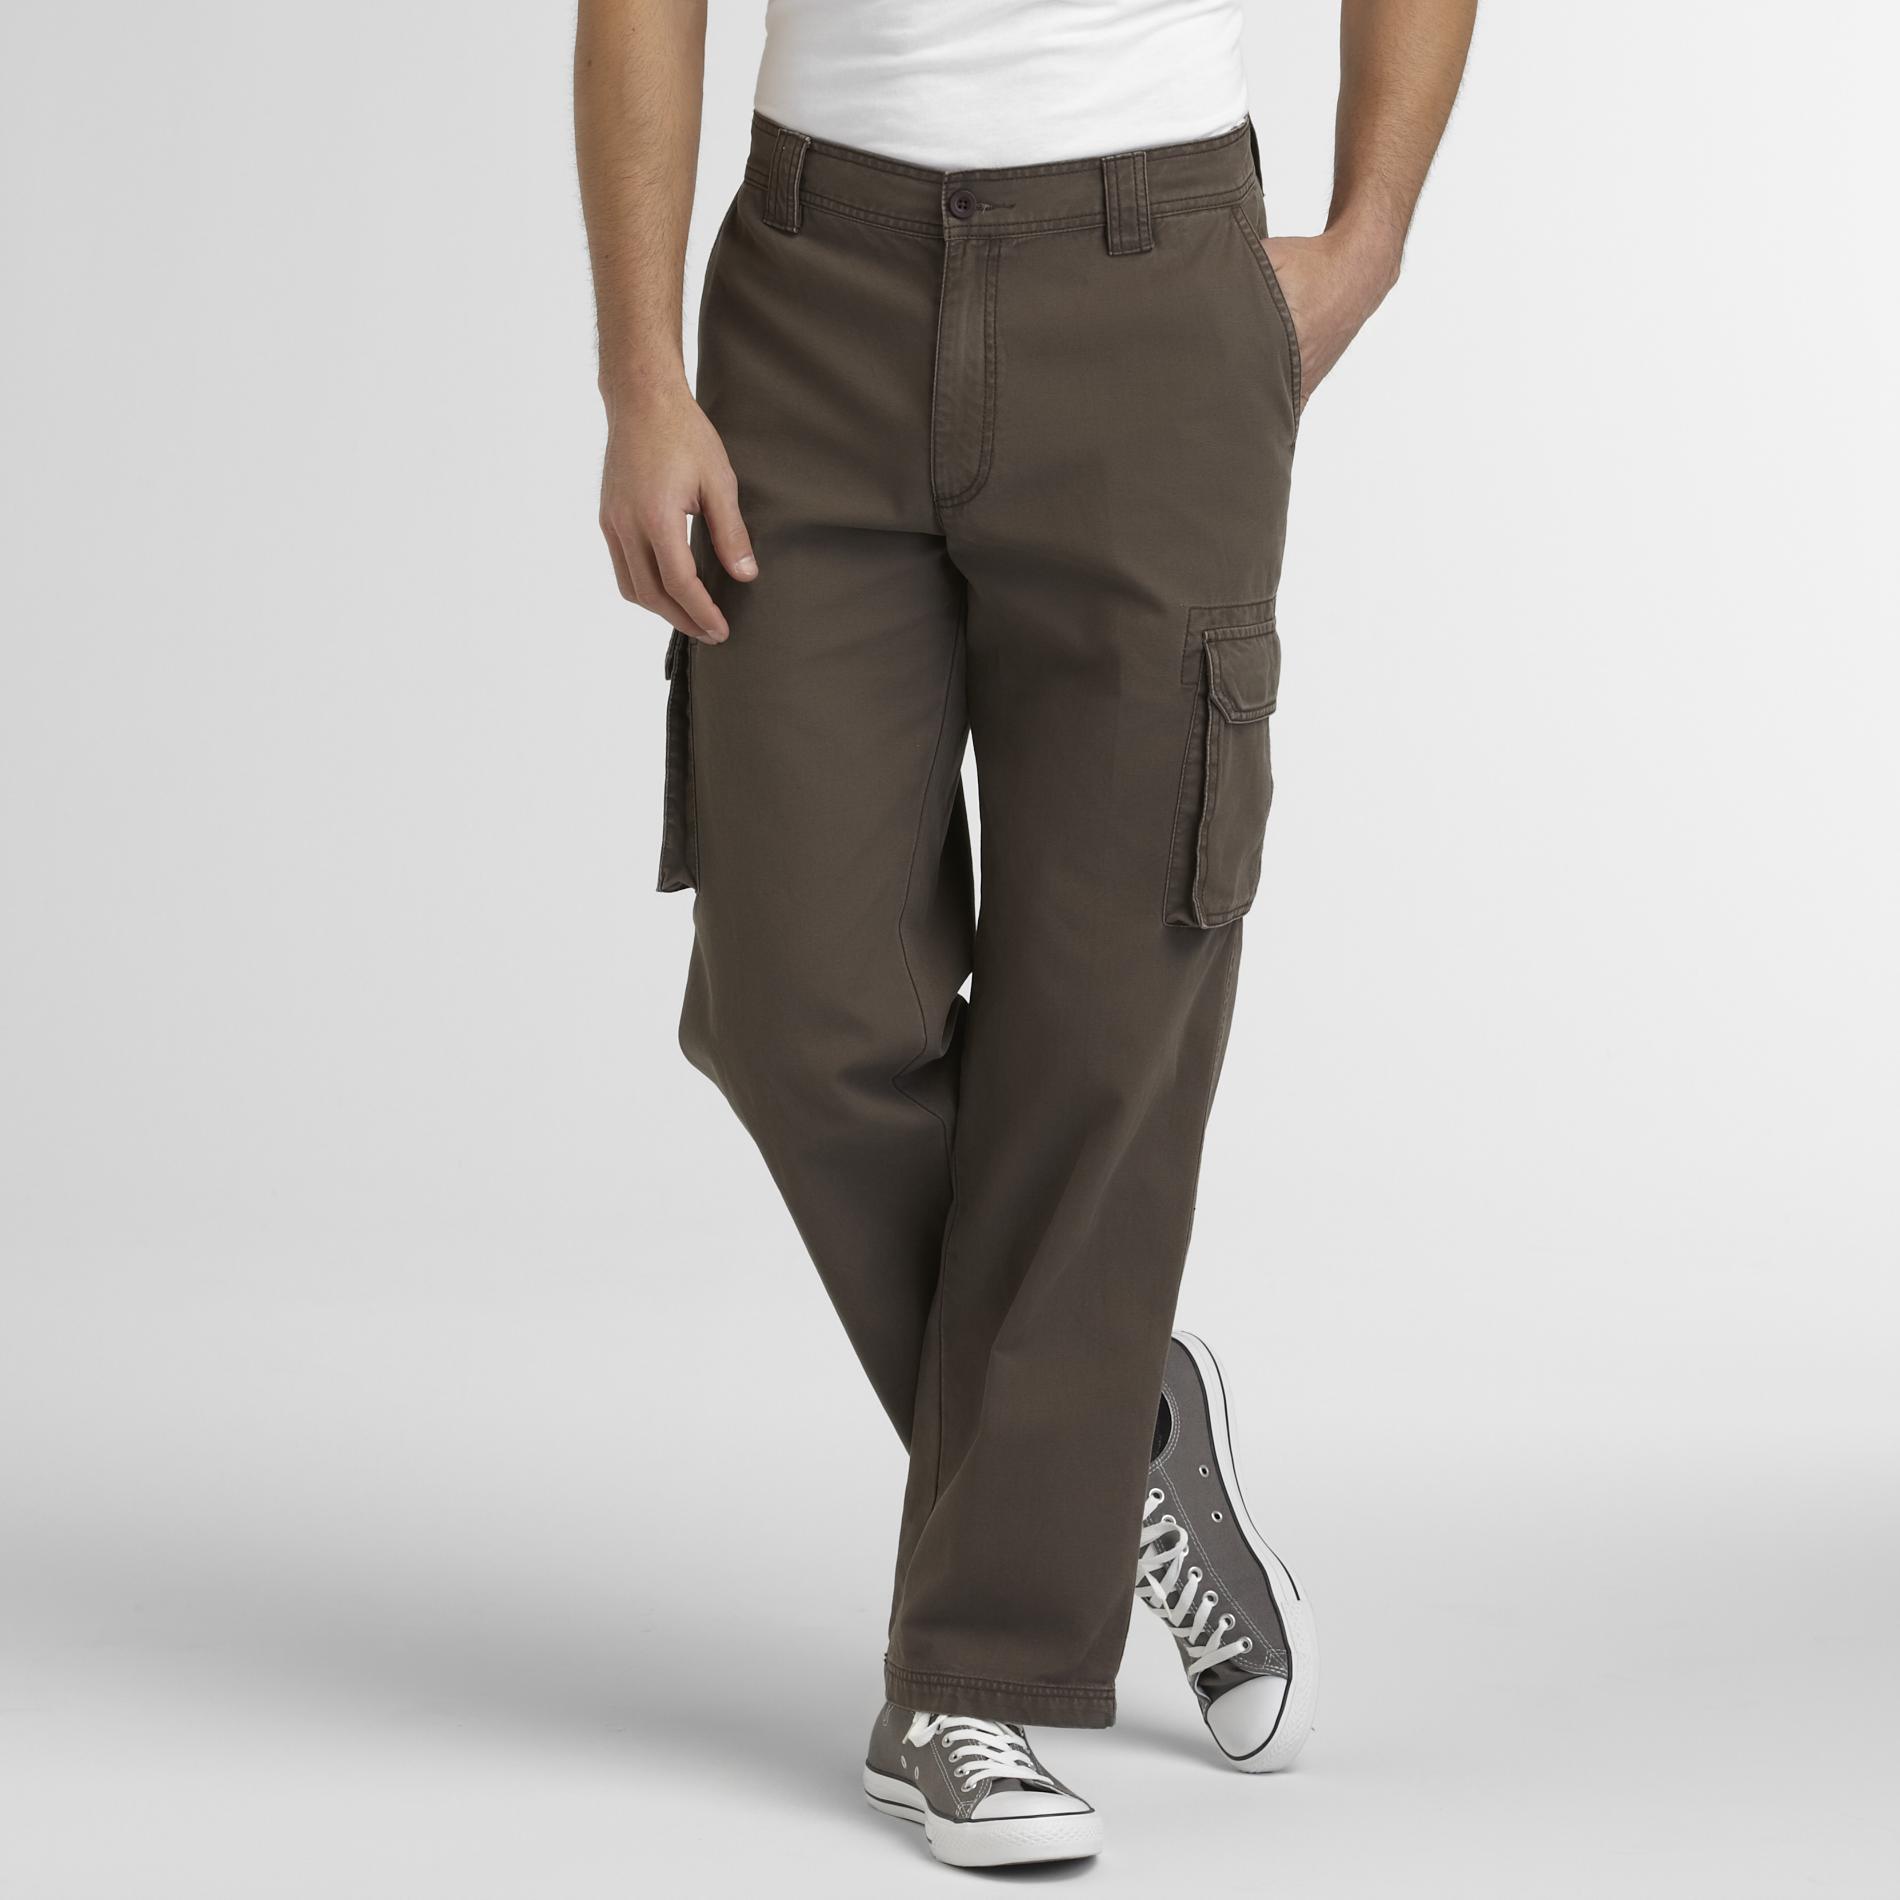 Outdoor Life Men's Cargo Khaki Pants | Shop Your Way: Online Shopping ...